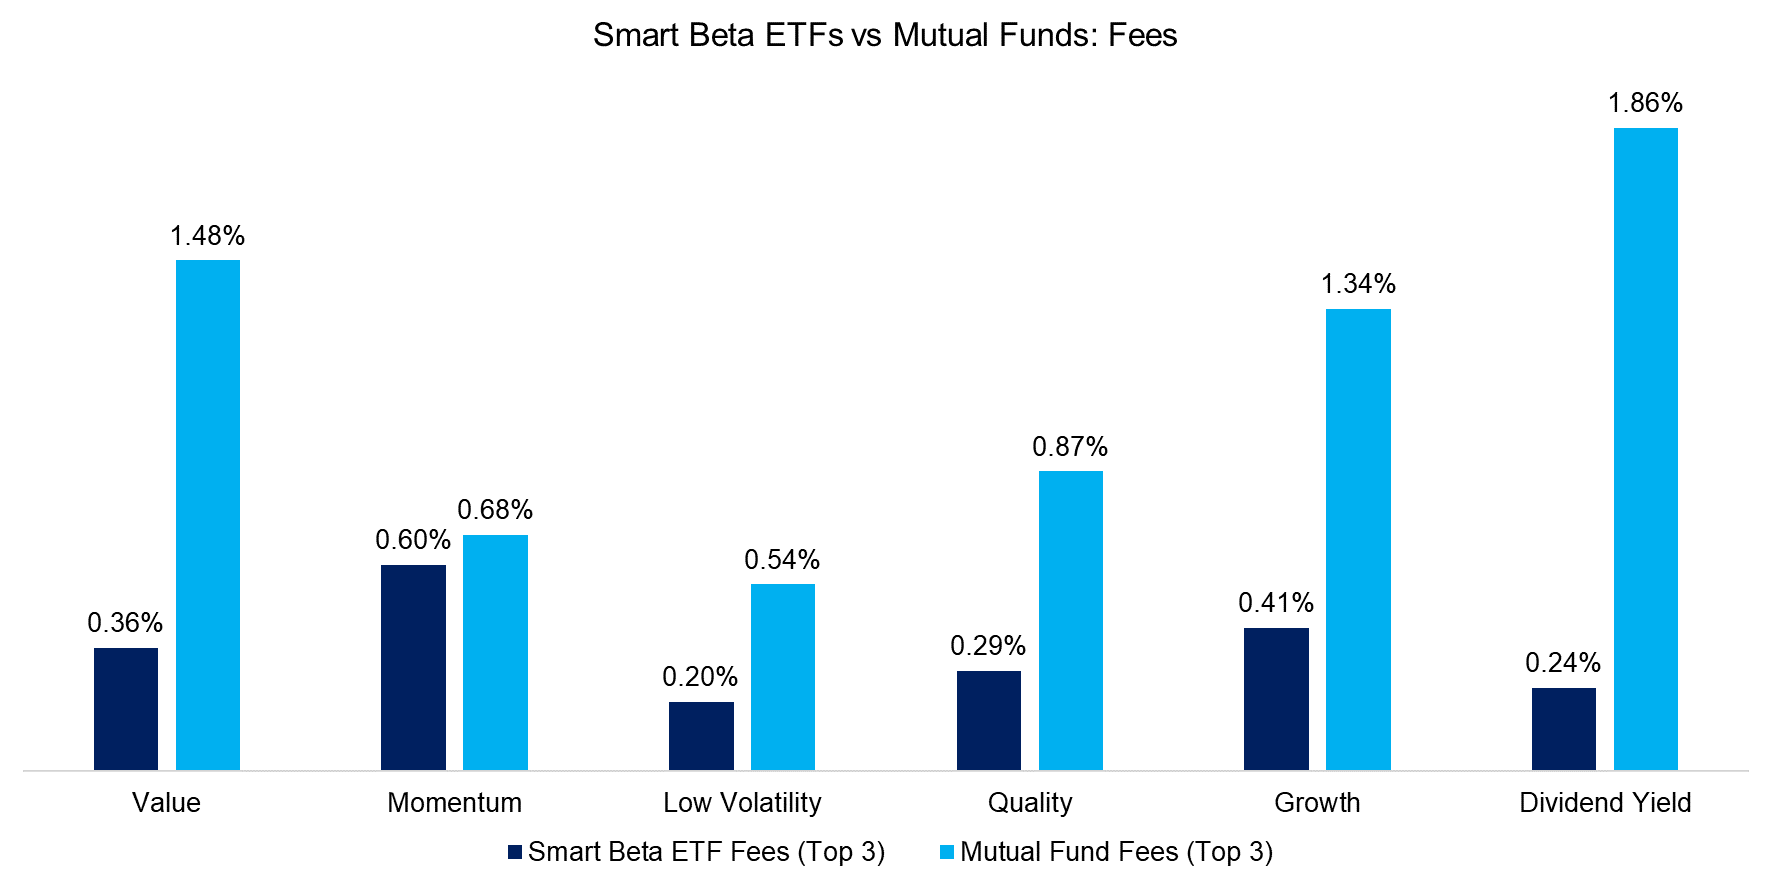 Smart Beta ETFs vs Mutual Funds Fees